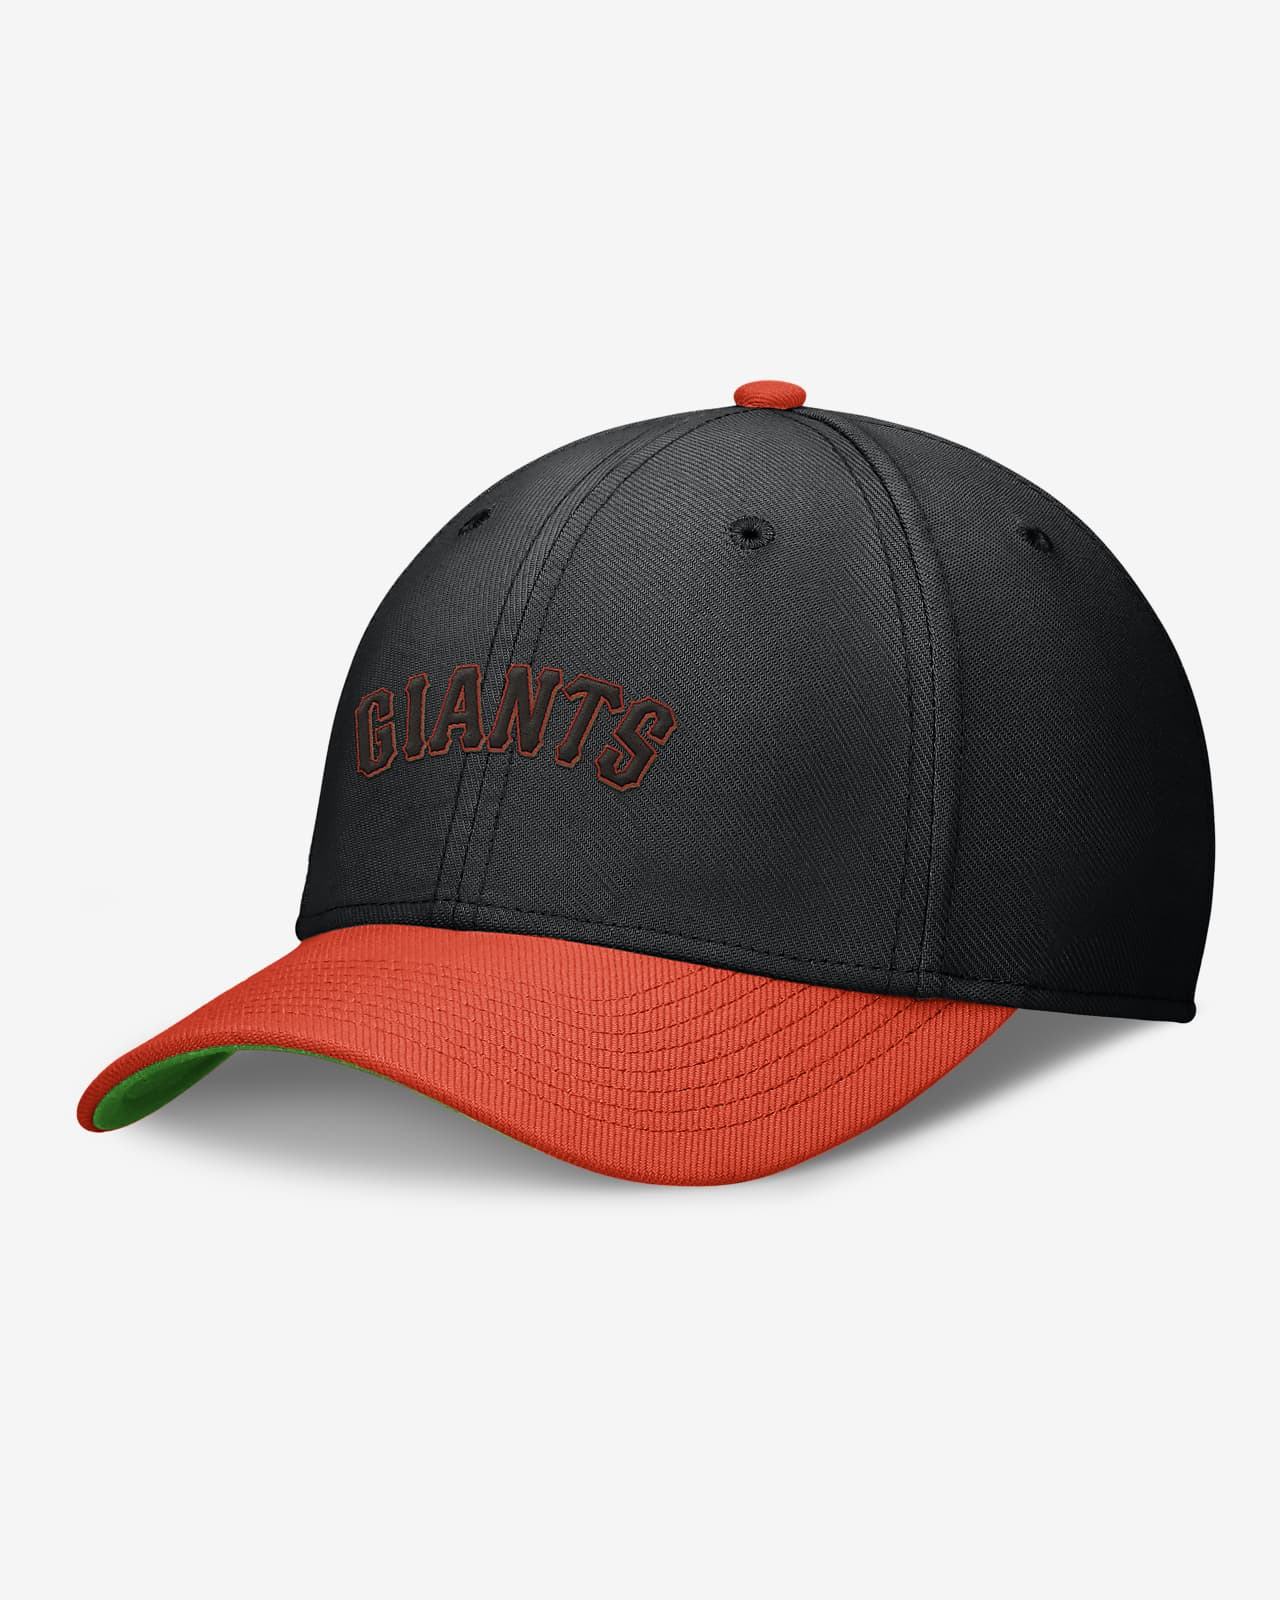 San Francisco Giants Rewind Cooperstown Swoosh Men's Nike Dri-FIT MLB Hat